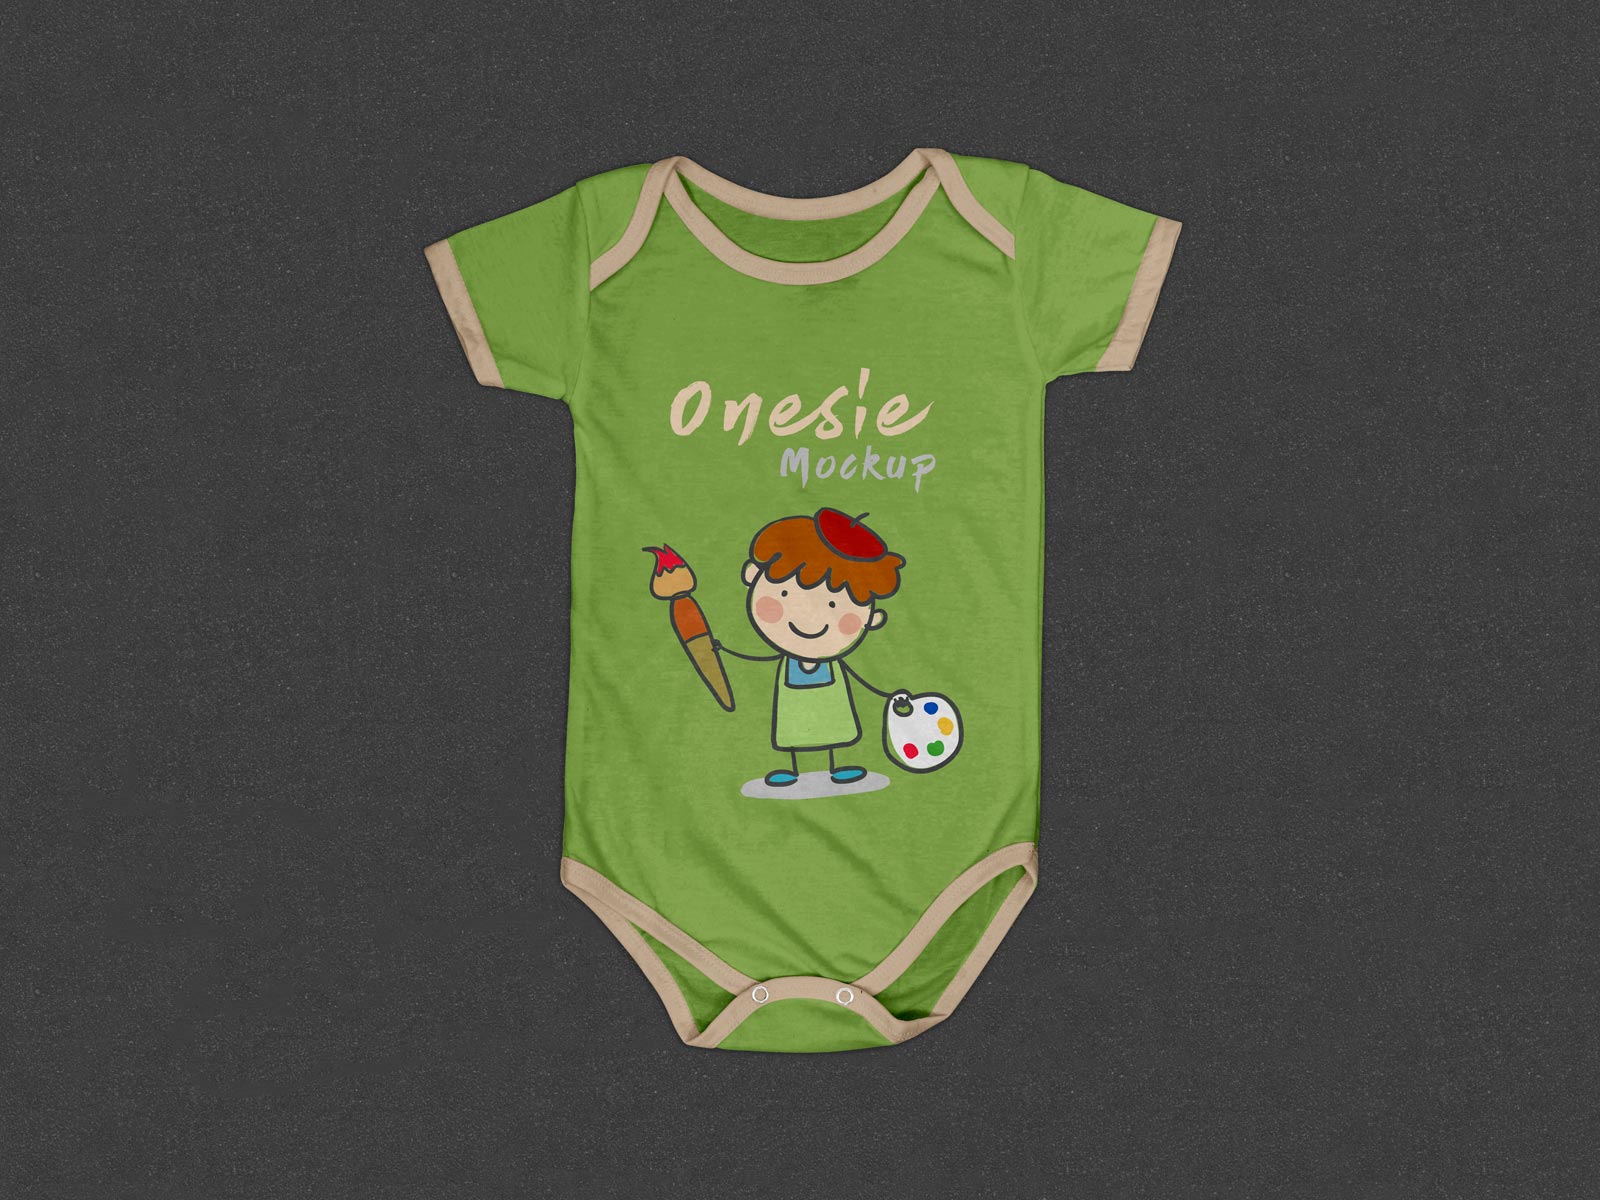 Download Free Baby Onesie Mockup Psd Designbolts